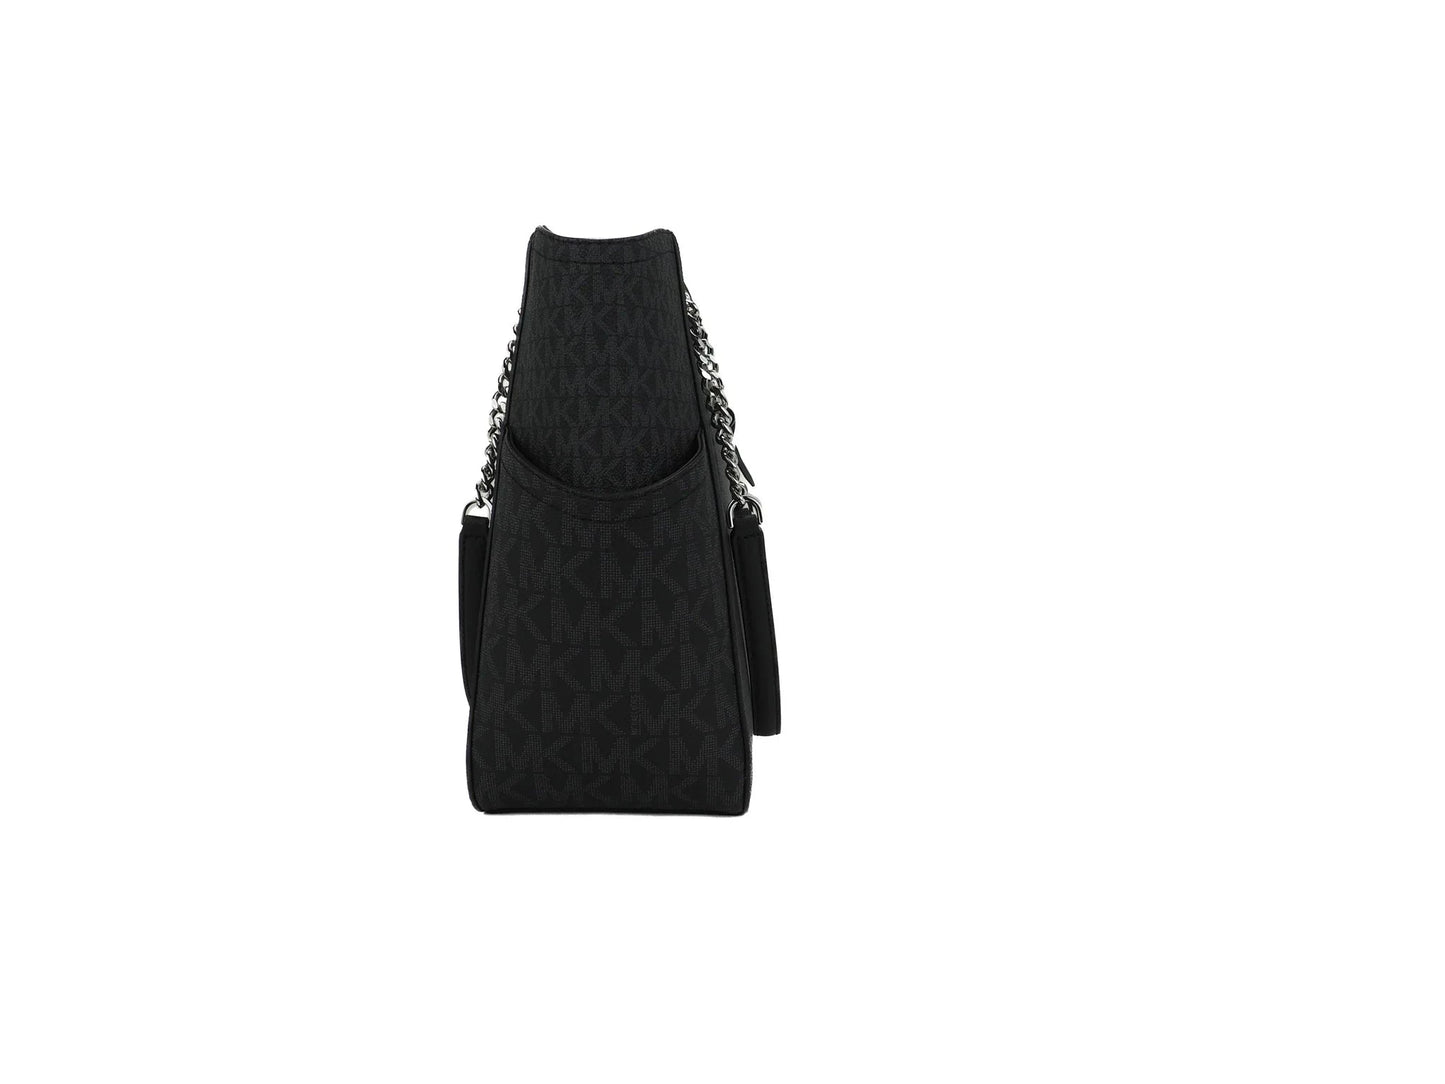 Michael Kors Jet Set Large Black Signature X Cross Chain Shoulder Tote Handbag